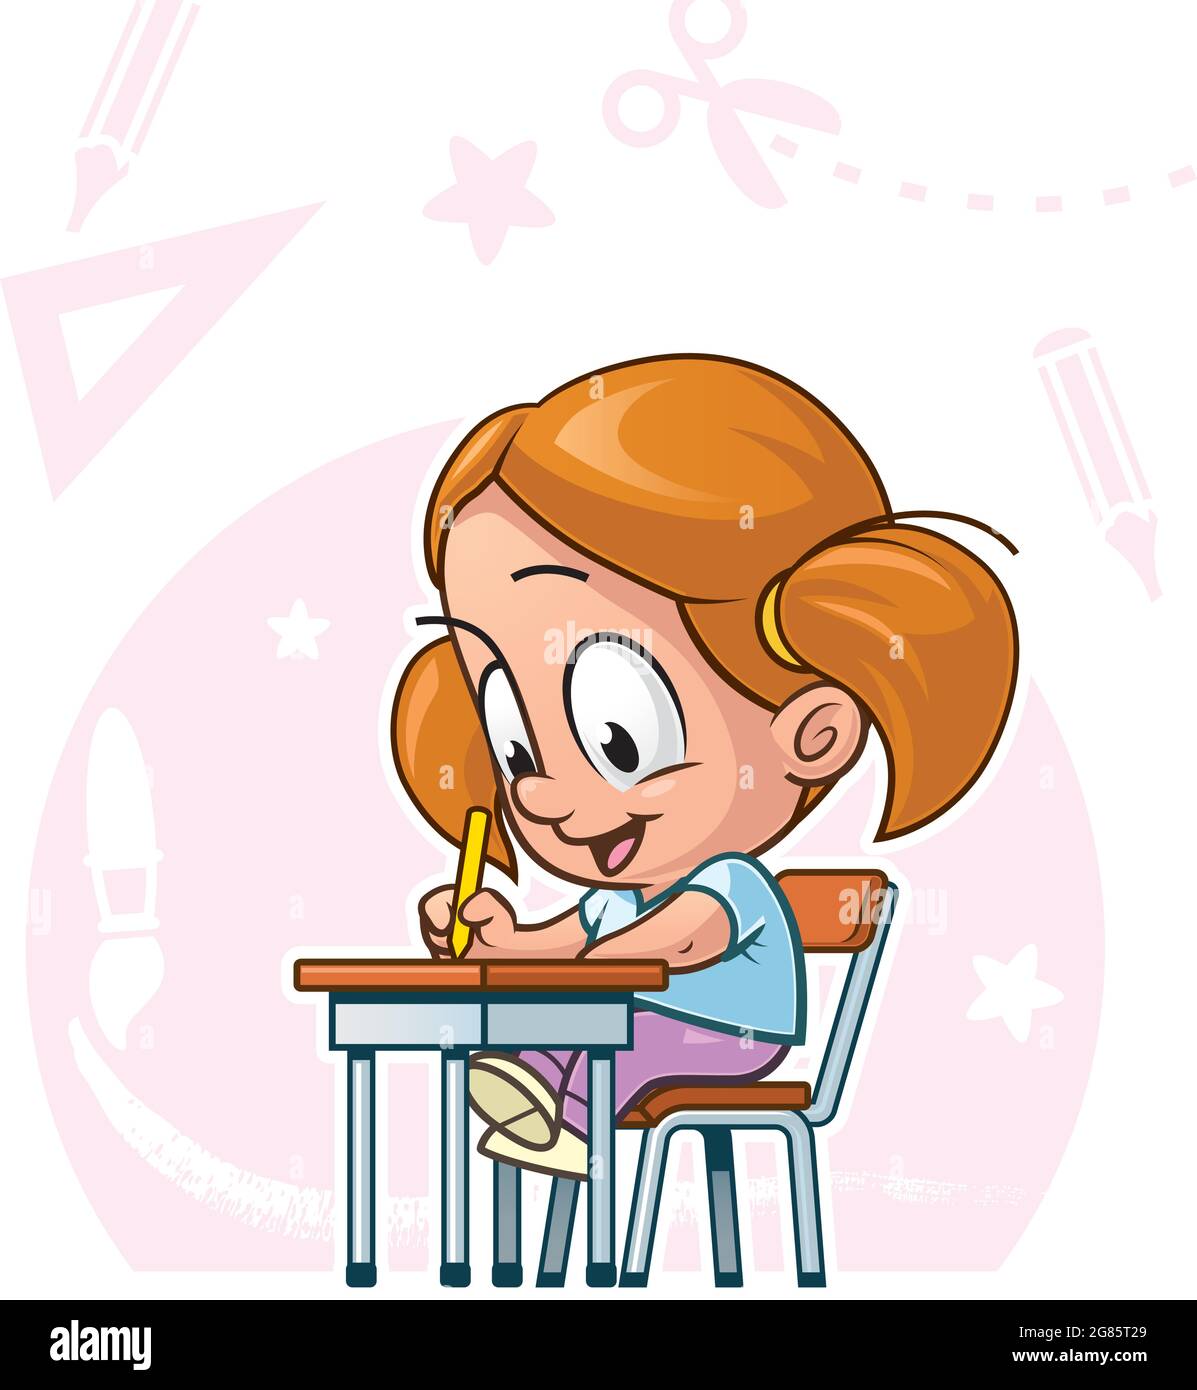 Cartoon illustration of a elementary schoolchild in the crafts classroom Stock Vector